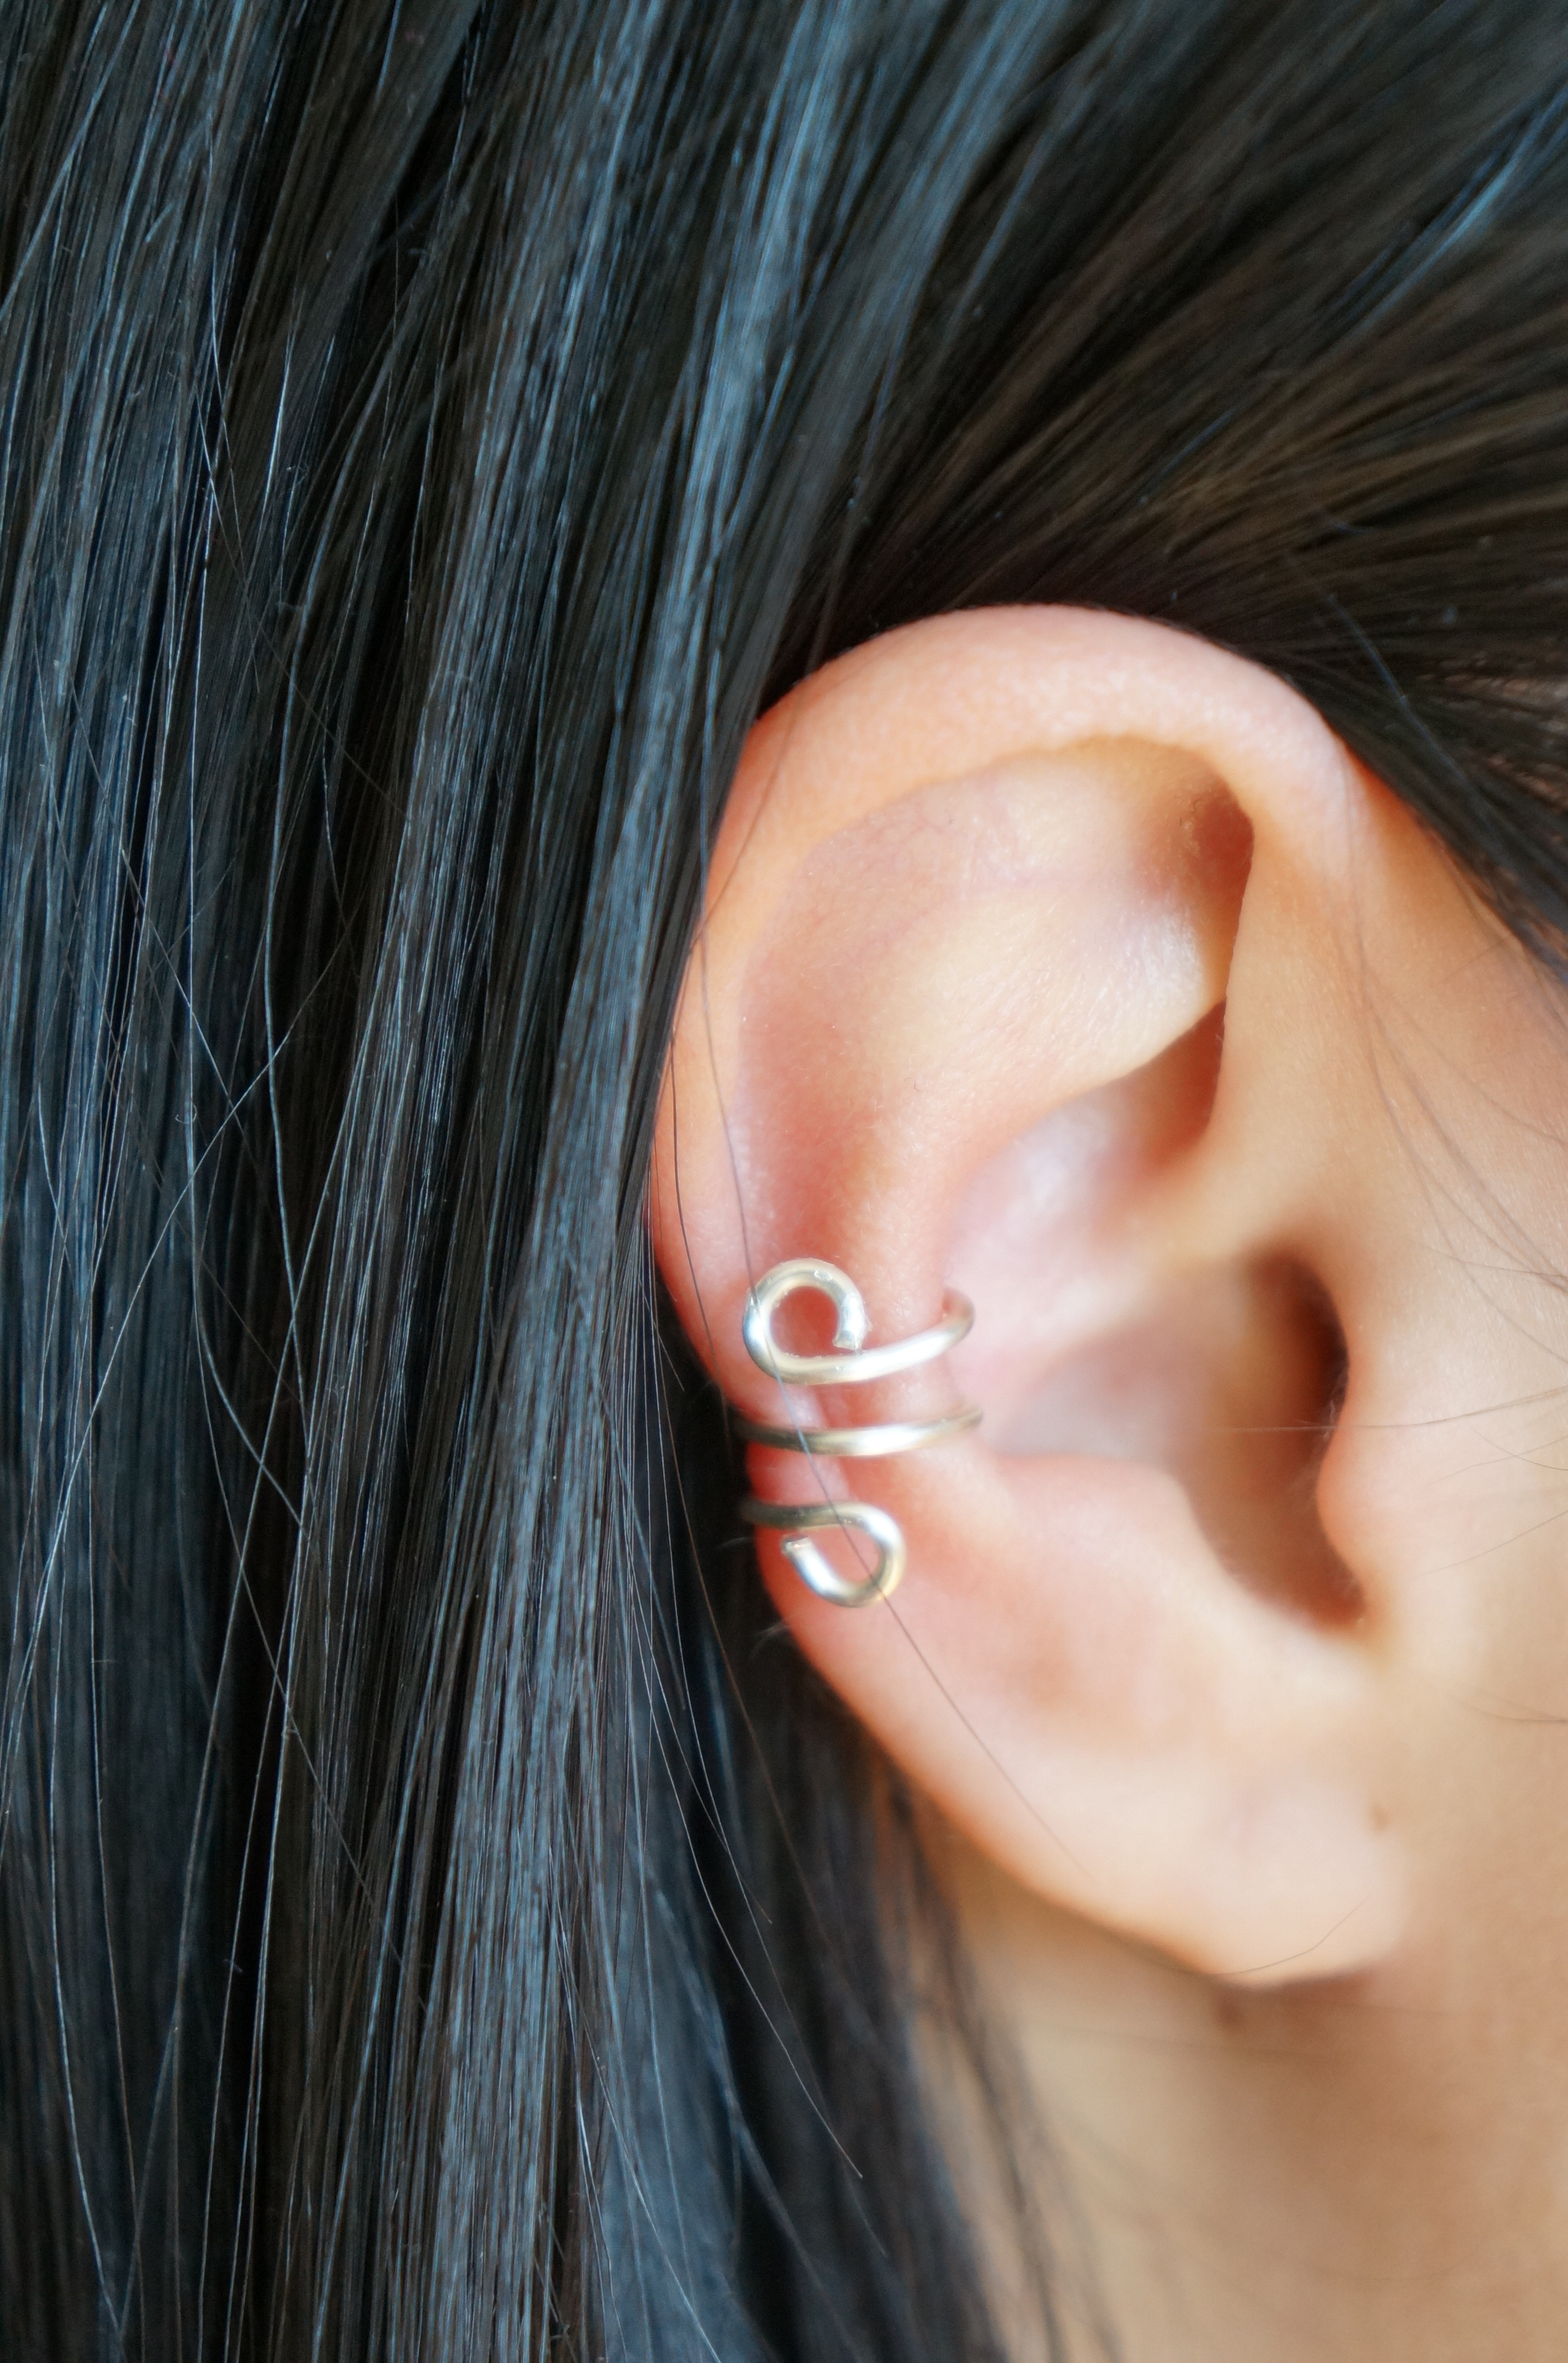 Best ideas about DIY Ear Cuffs
. Save or Pin DIY Simple Ear Cuffs Now.